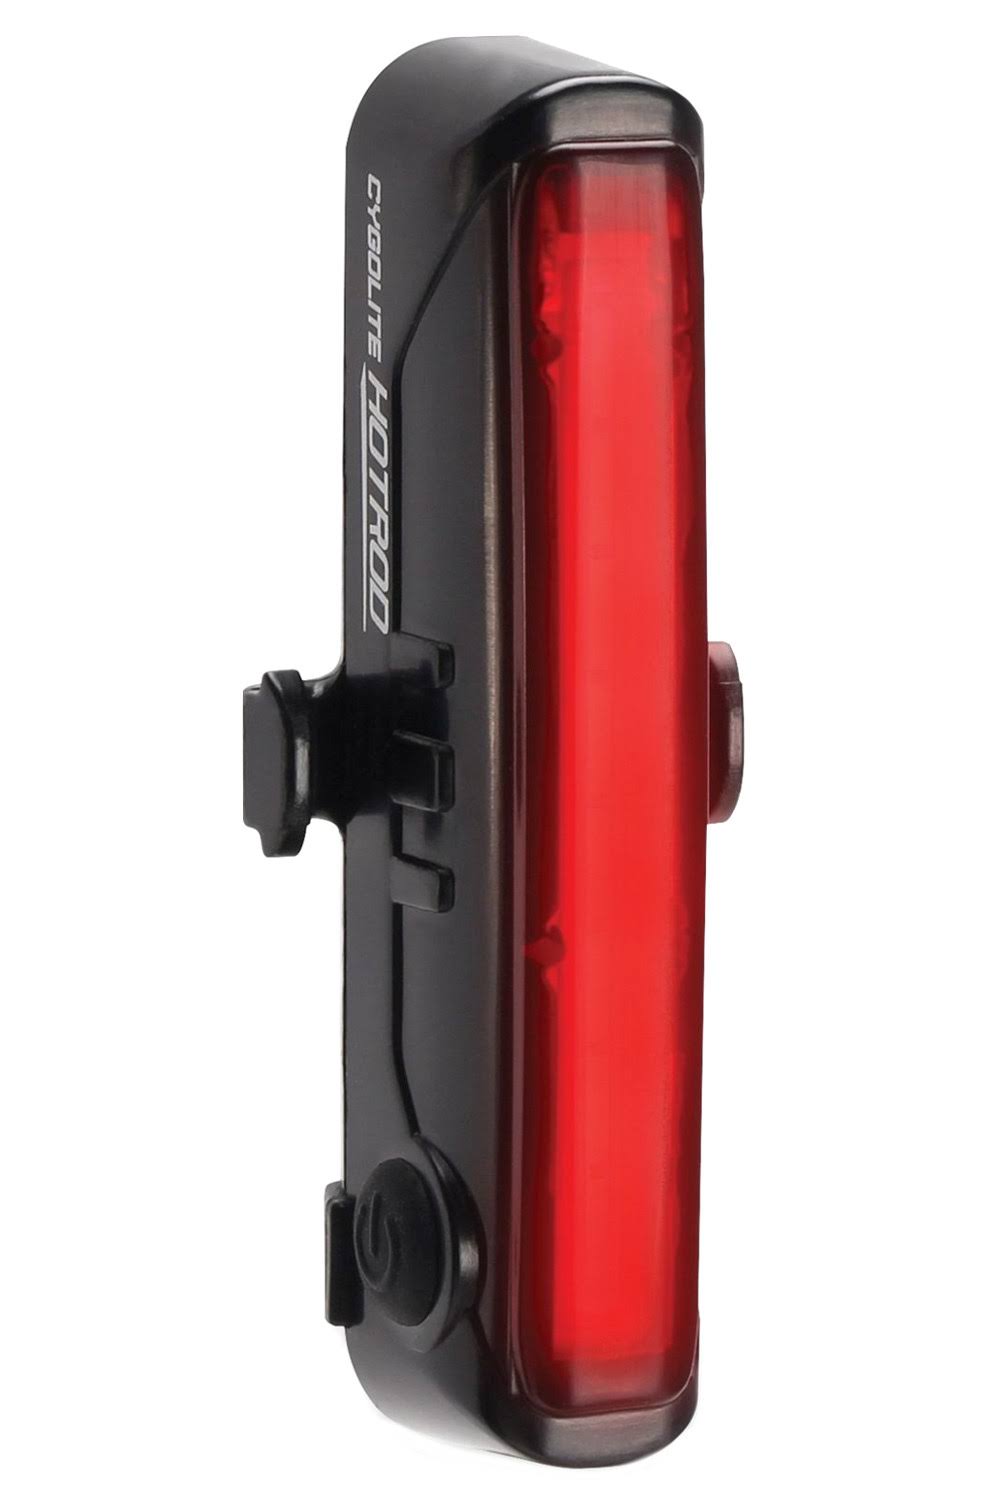 Cygolite Hotrod USB 50 Rechargeable Taillight